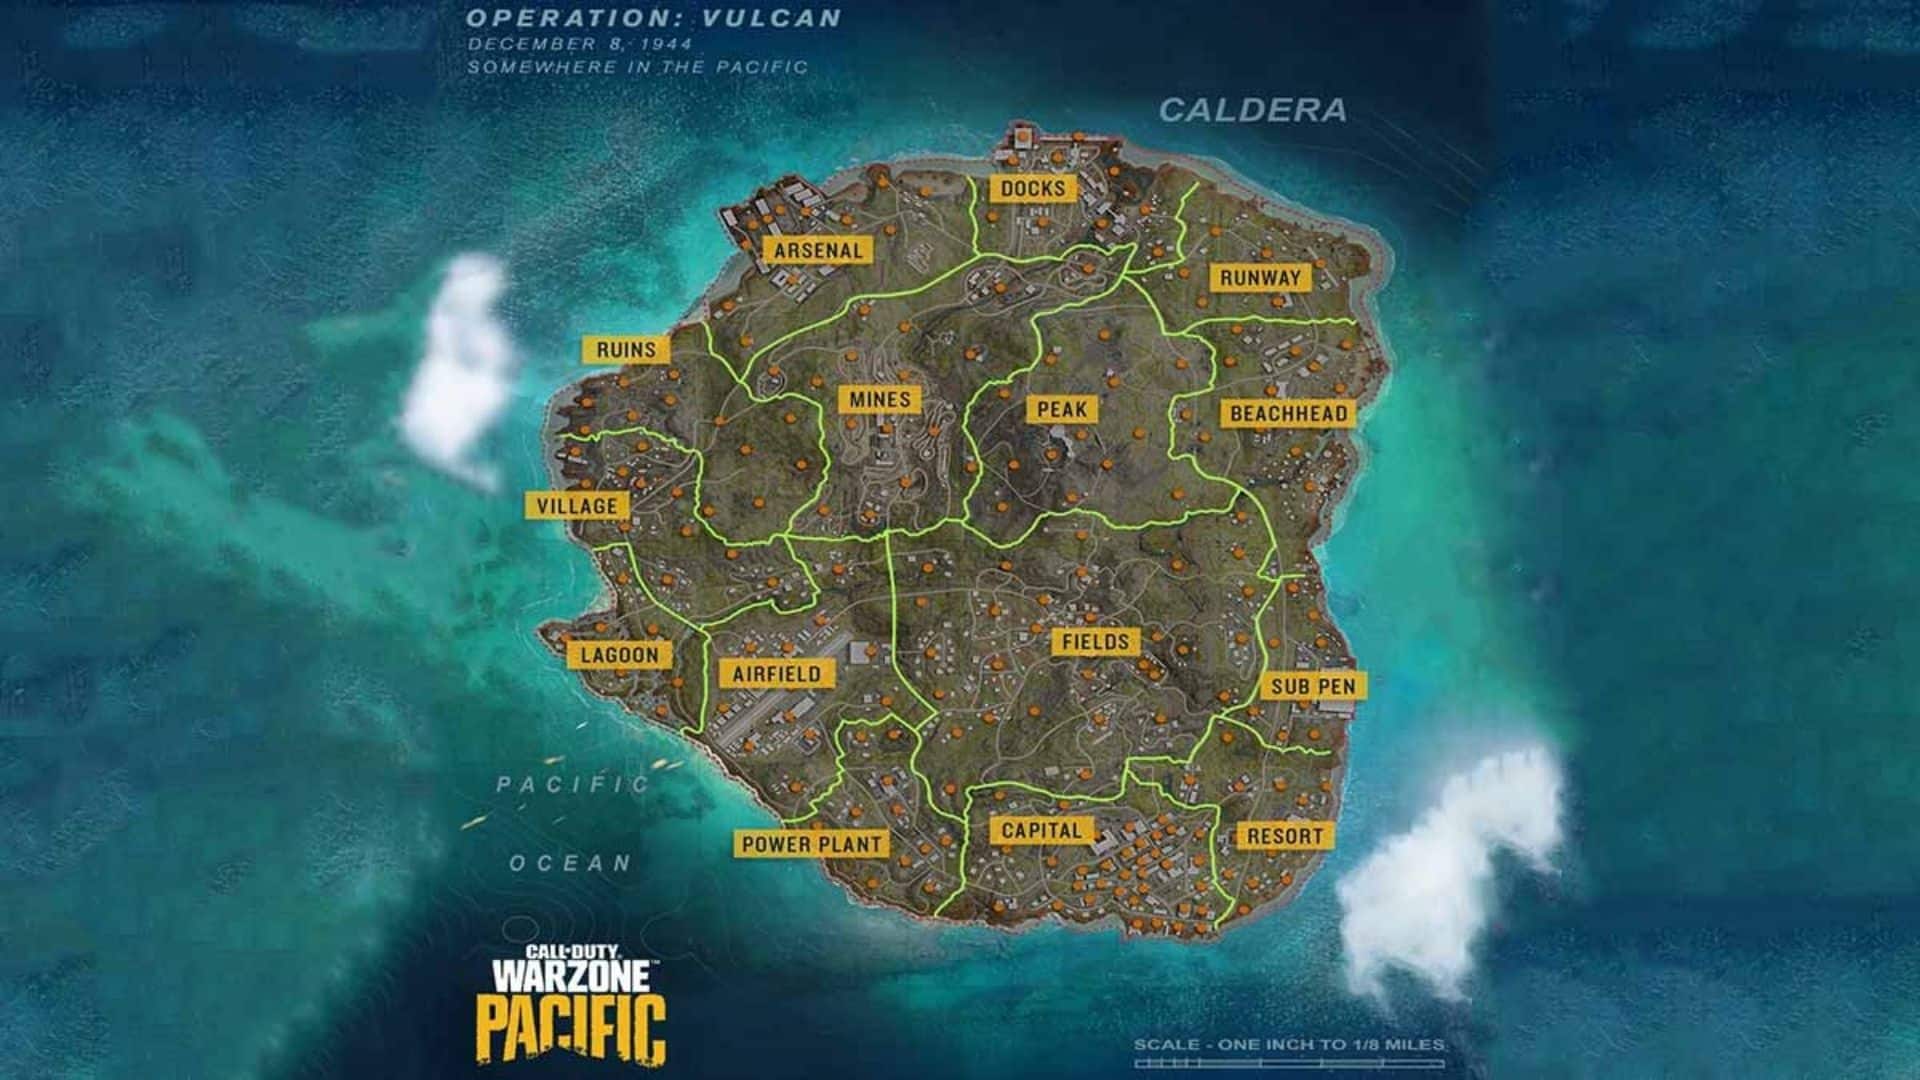 warzone pacific's caldera map